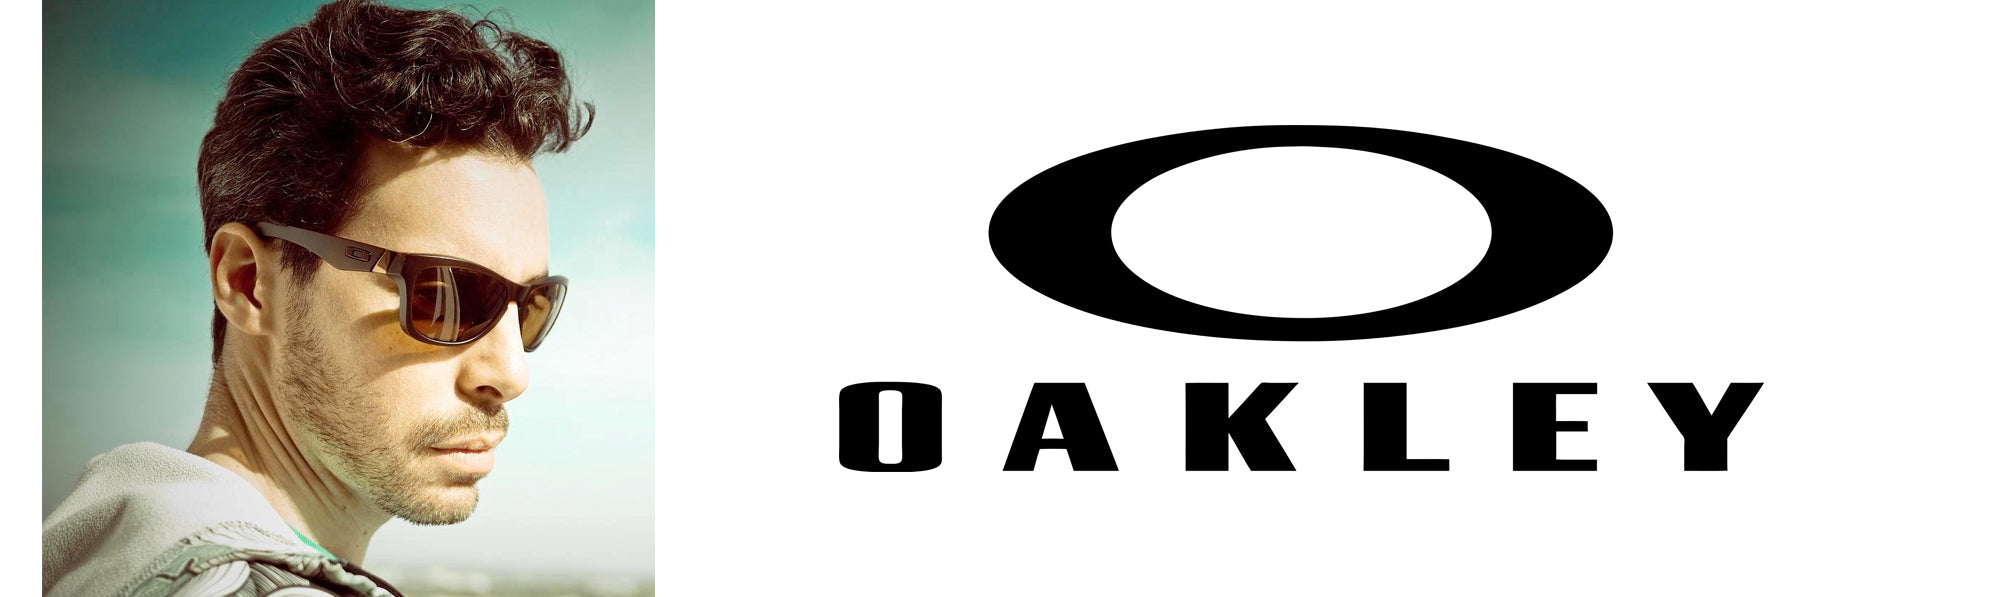 Oakley Optical